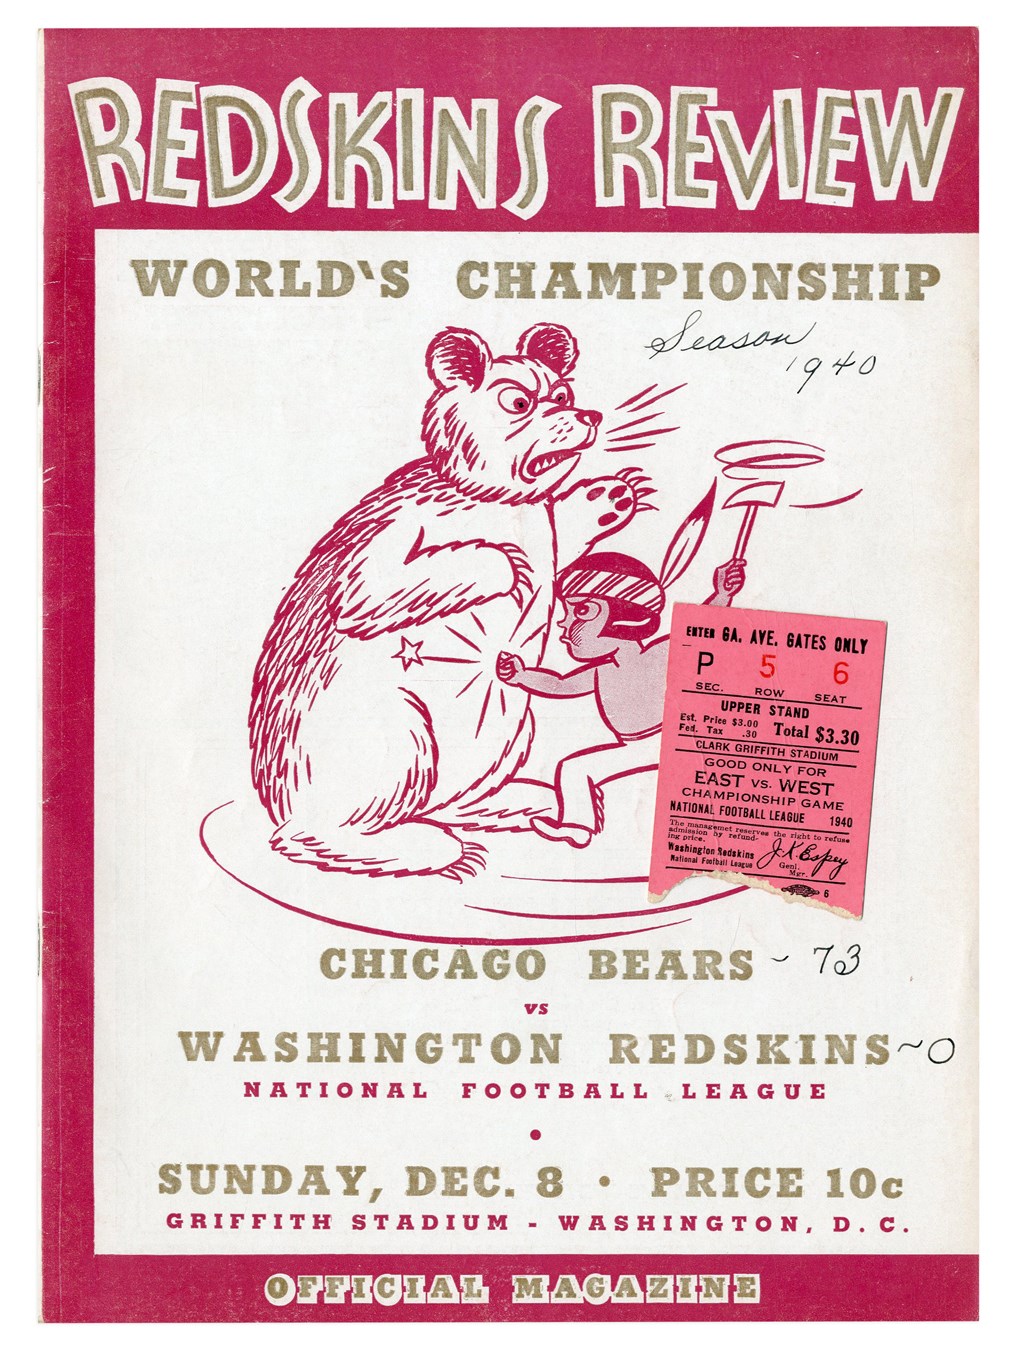 - Classic 1940 NFL Championship Game Program & Ticket & More (73-0)